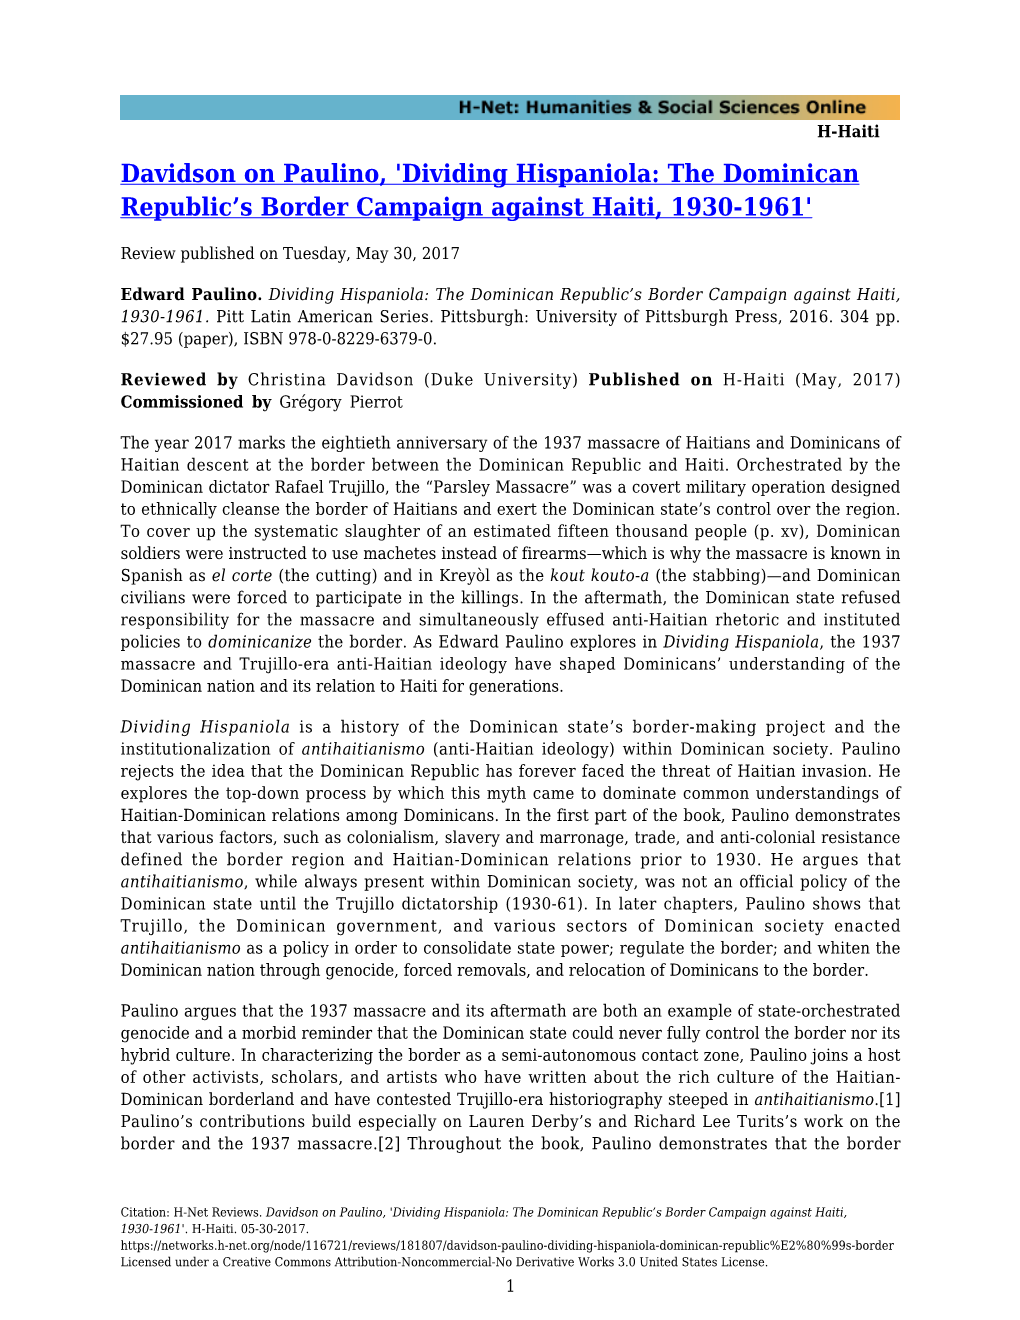 'Dividing Hispaniola: the Dominican Republic's Border Campaign Against Haiti, 1930-1961'